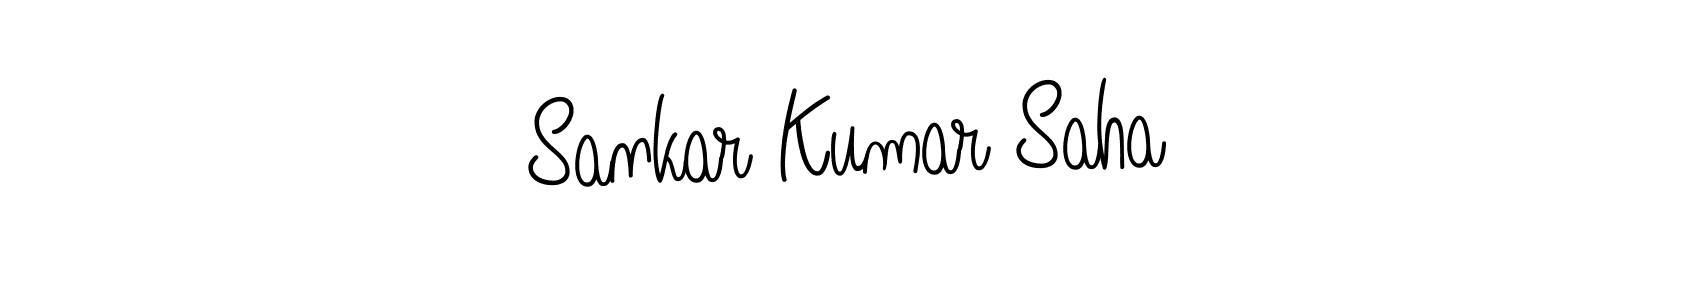 How to Draw Sankar Kumar Saha signature style? Angelique-Rose-font-FFP is a latest design signature styles for name Sankar Kumar Saha. Sankar Kumar Saha signature style 5 images and pictures png